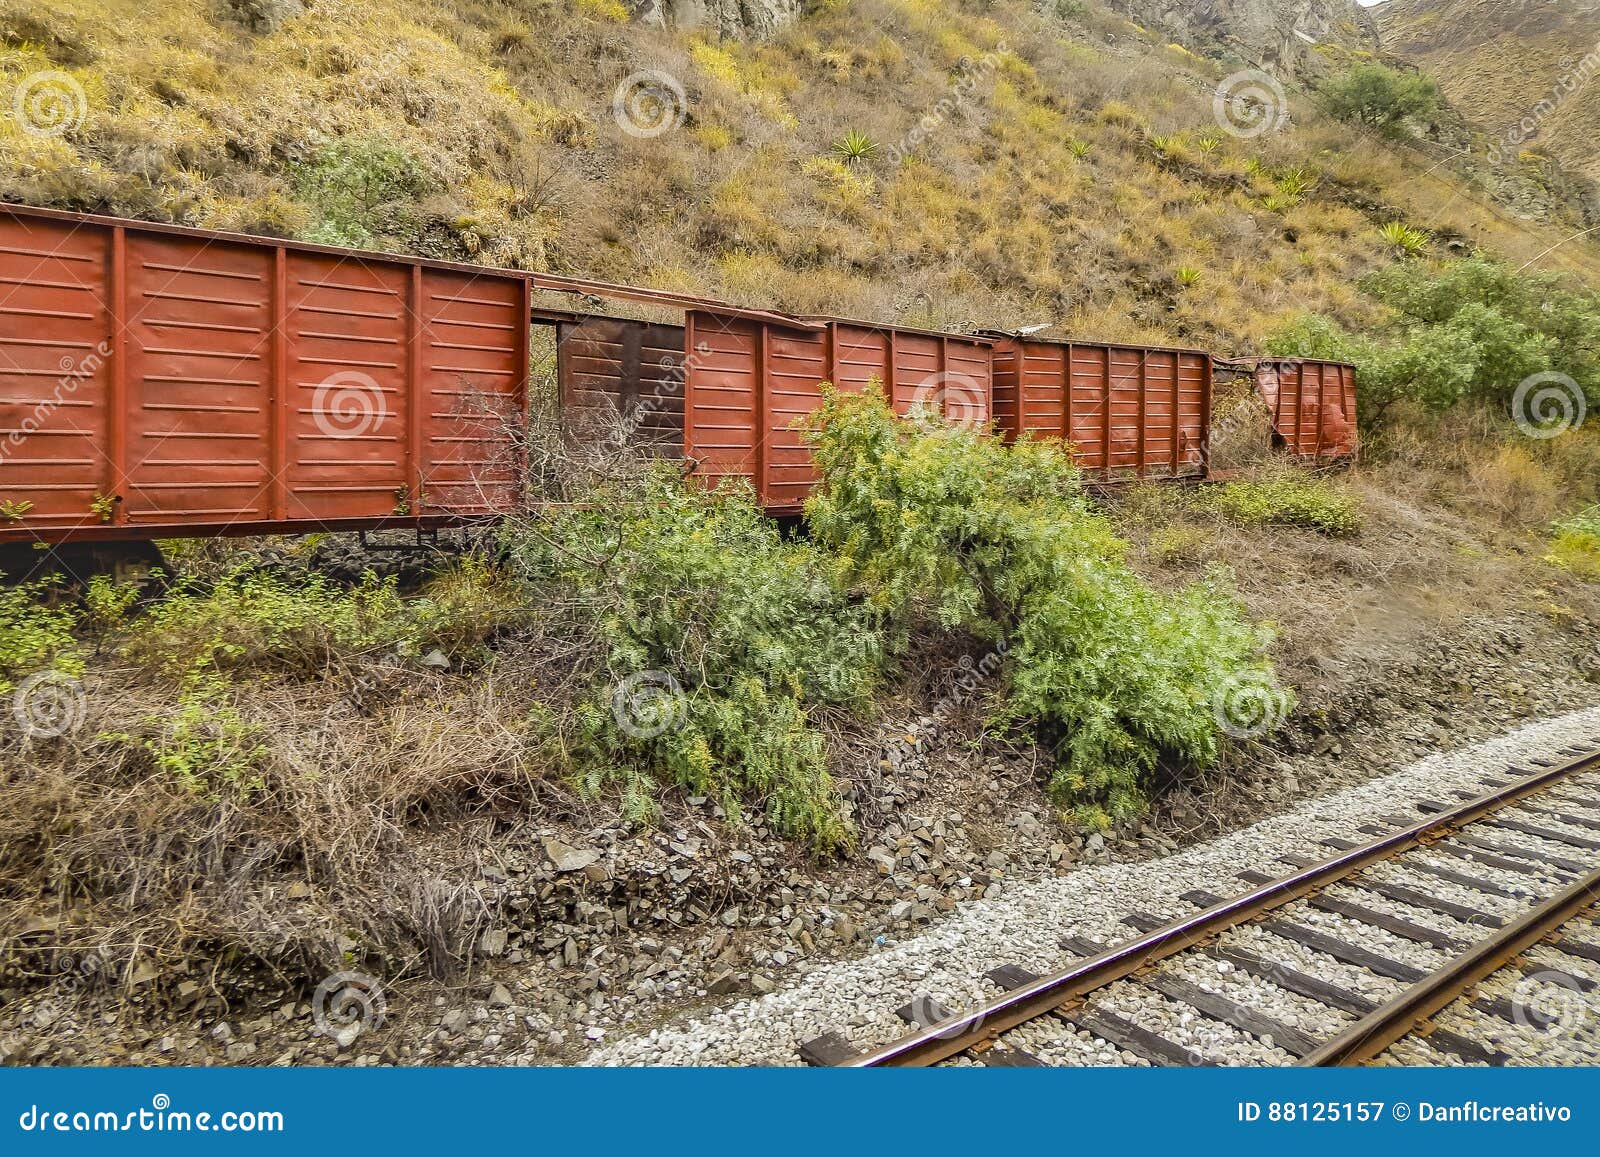 railroad at nariz del diablo trip alausi ecuador